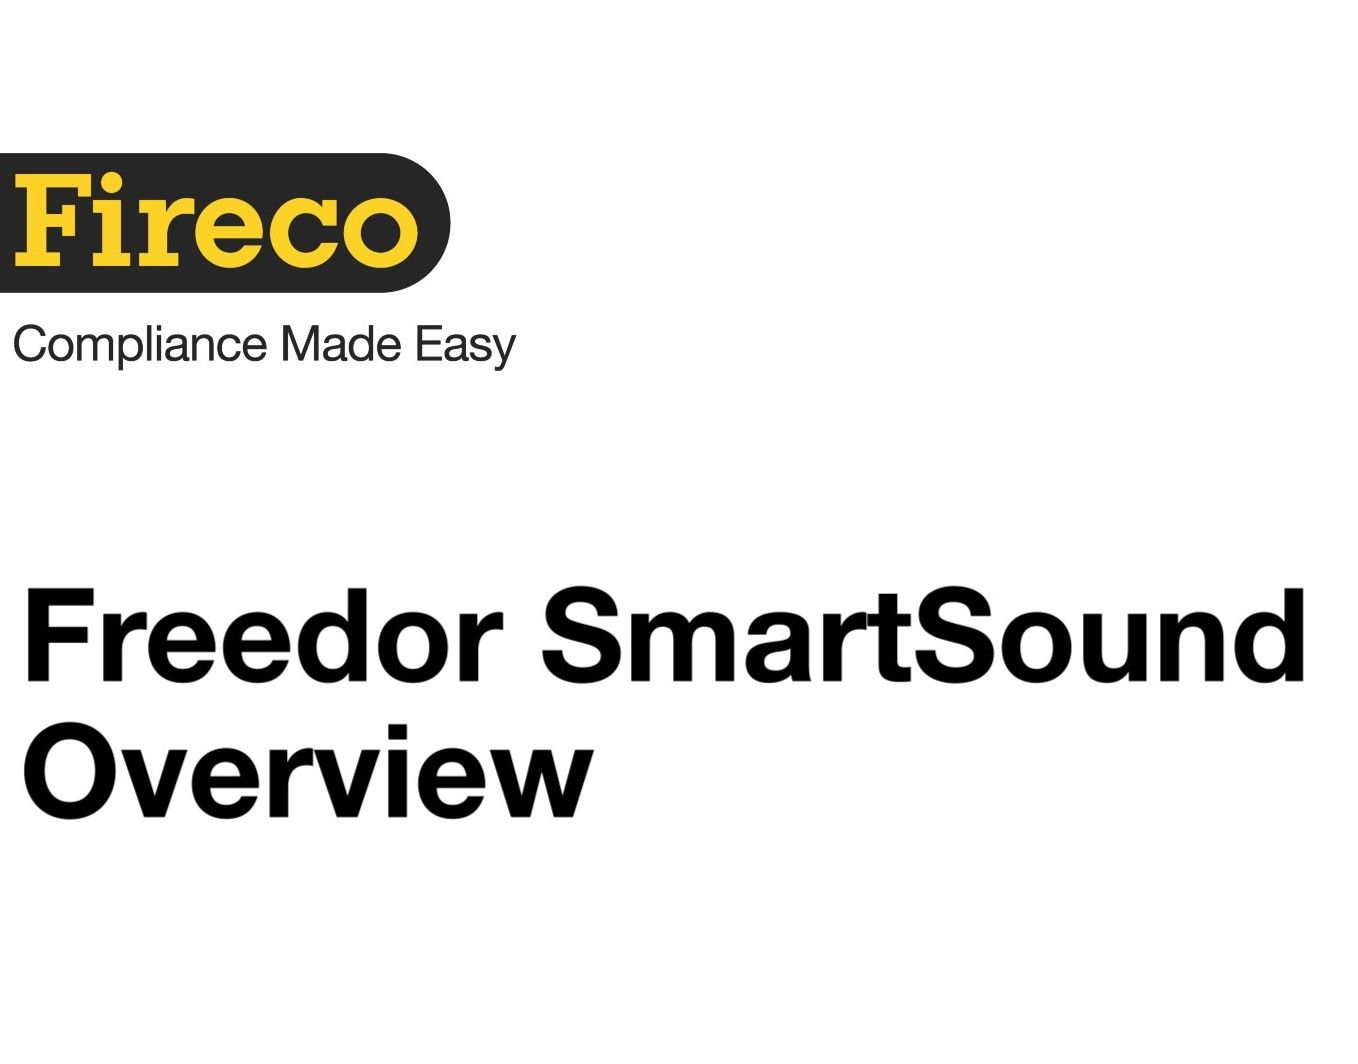 Freedor SmartSound Overview